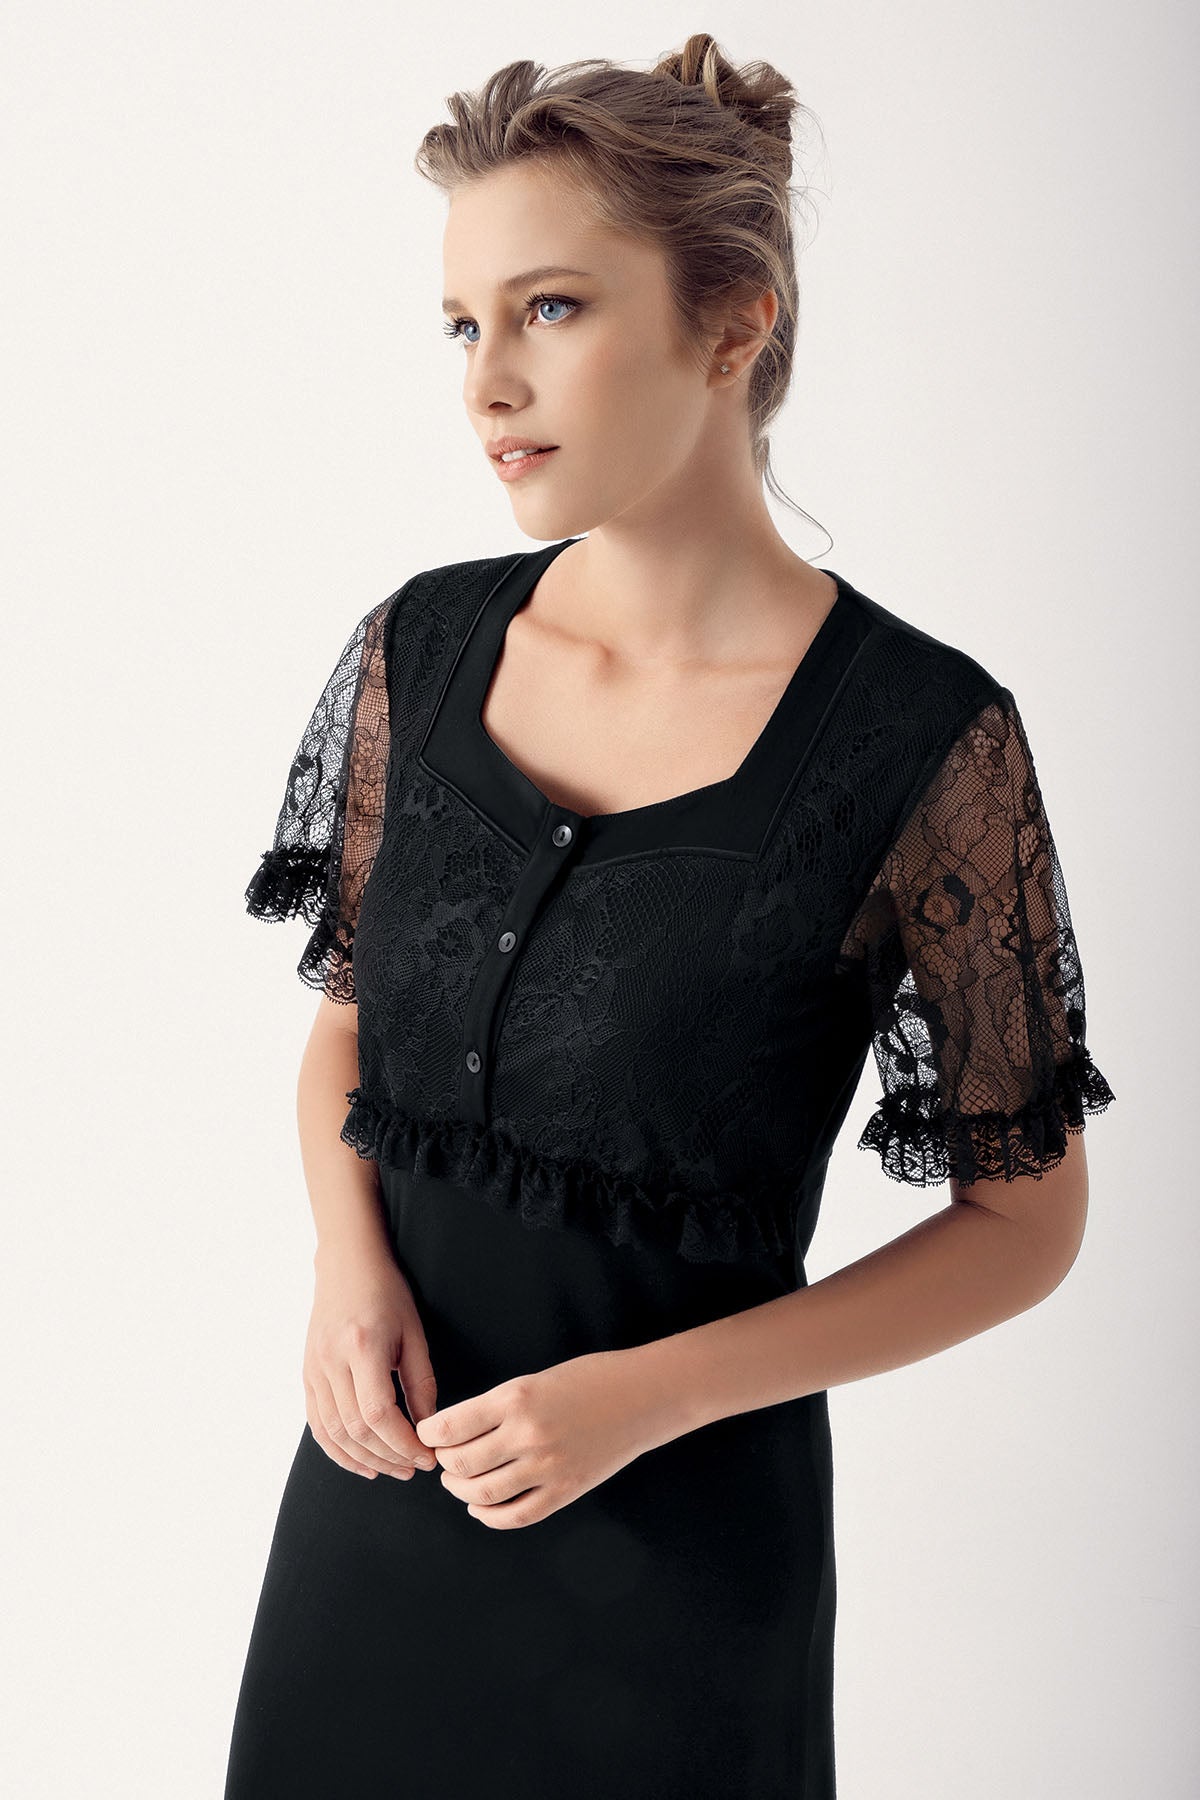 Lace Sleeve Maternity & Nursing Nightgown Black - 14100